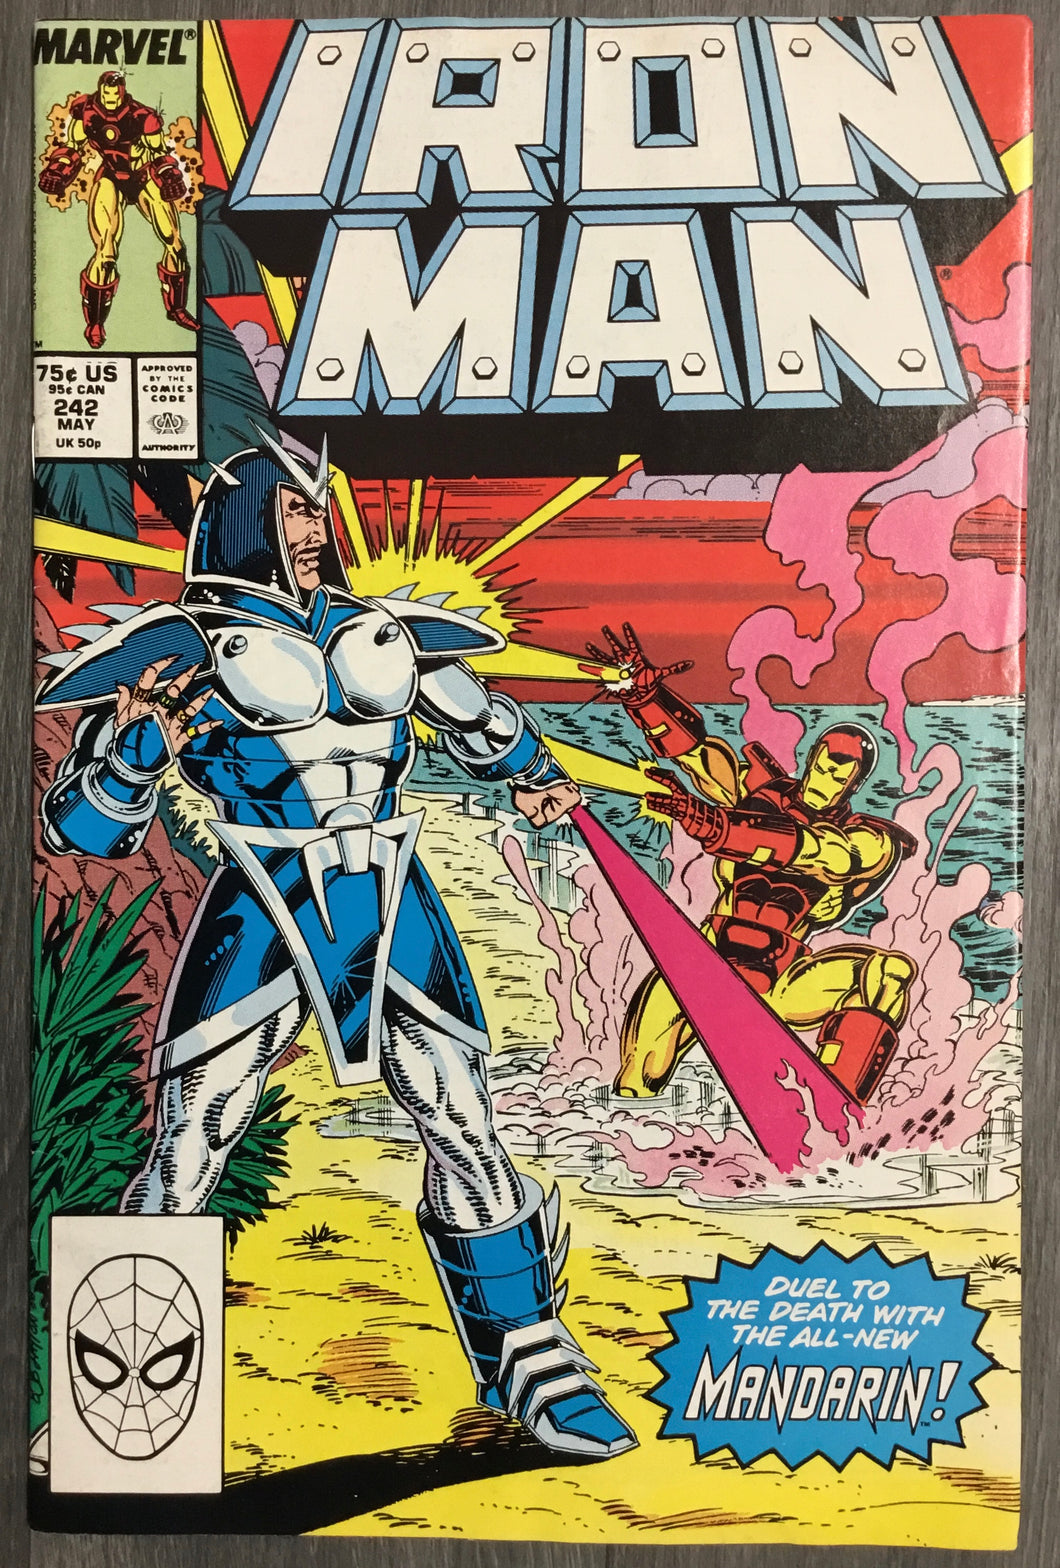 Iron Man No. #242 1989 Marvel Comics